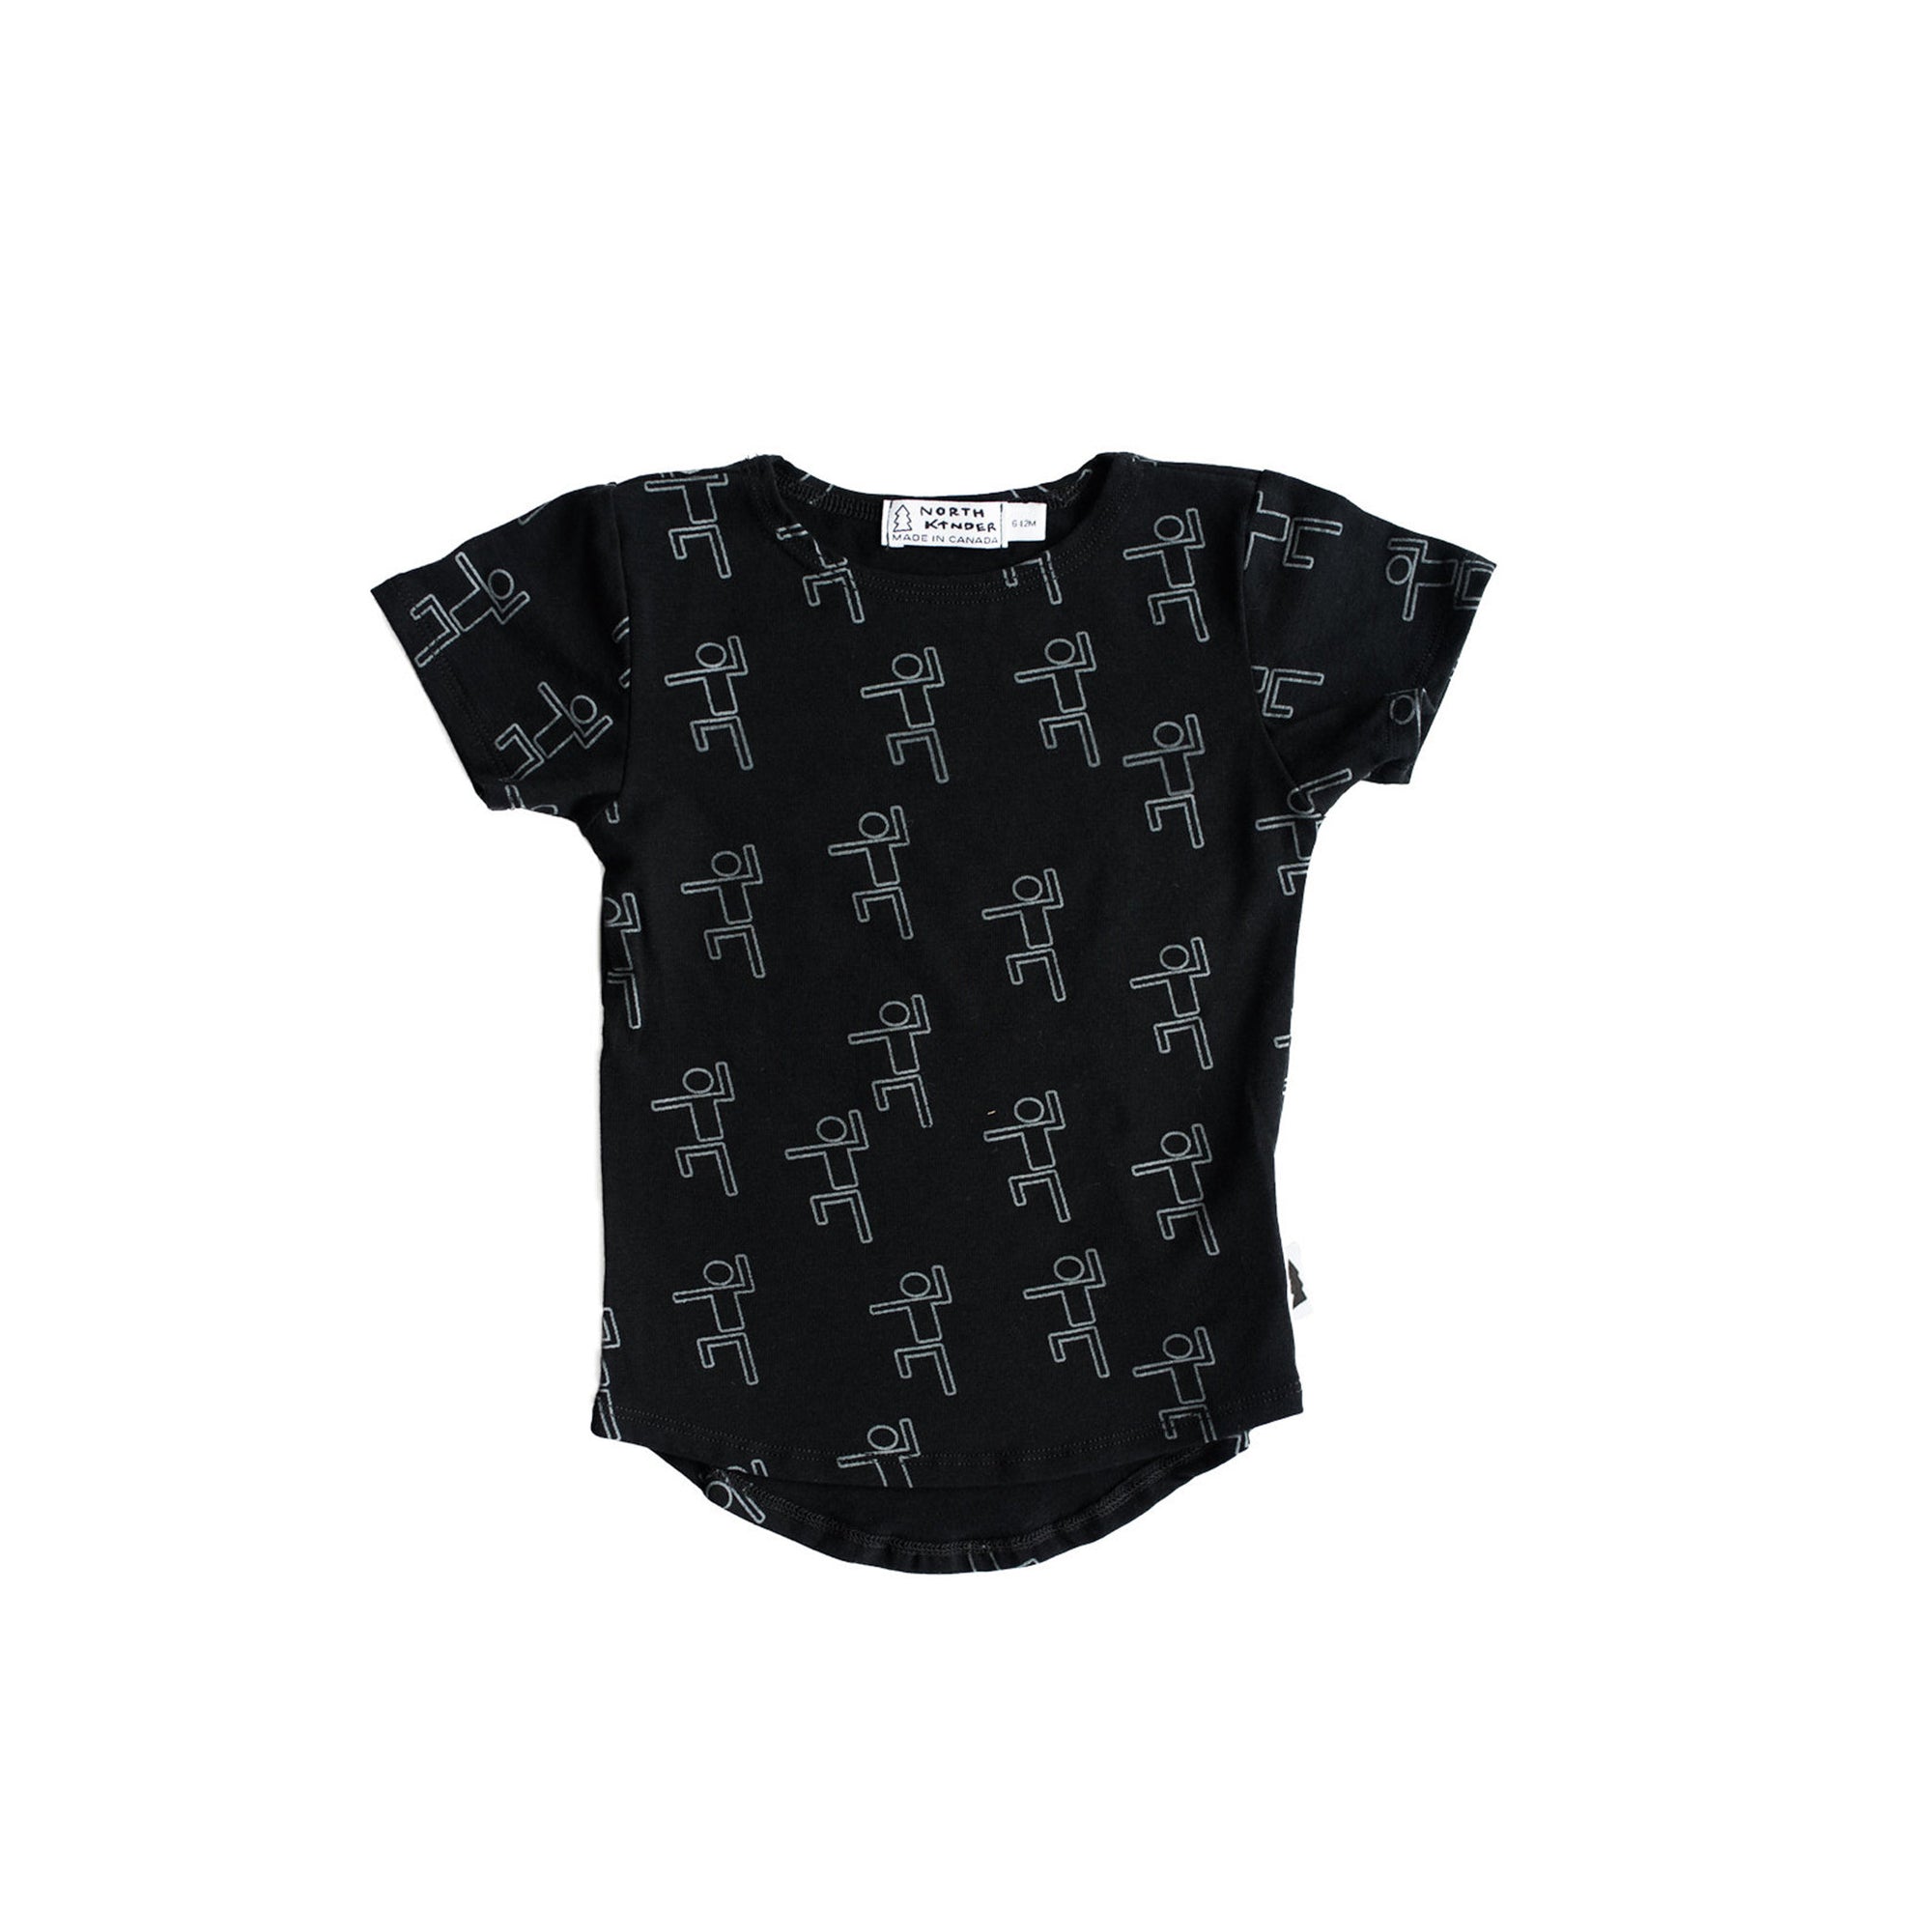 t-shirt - black nk kid - size 6-12M